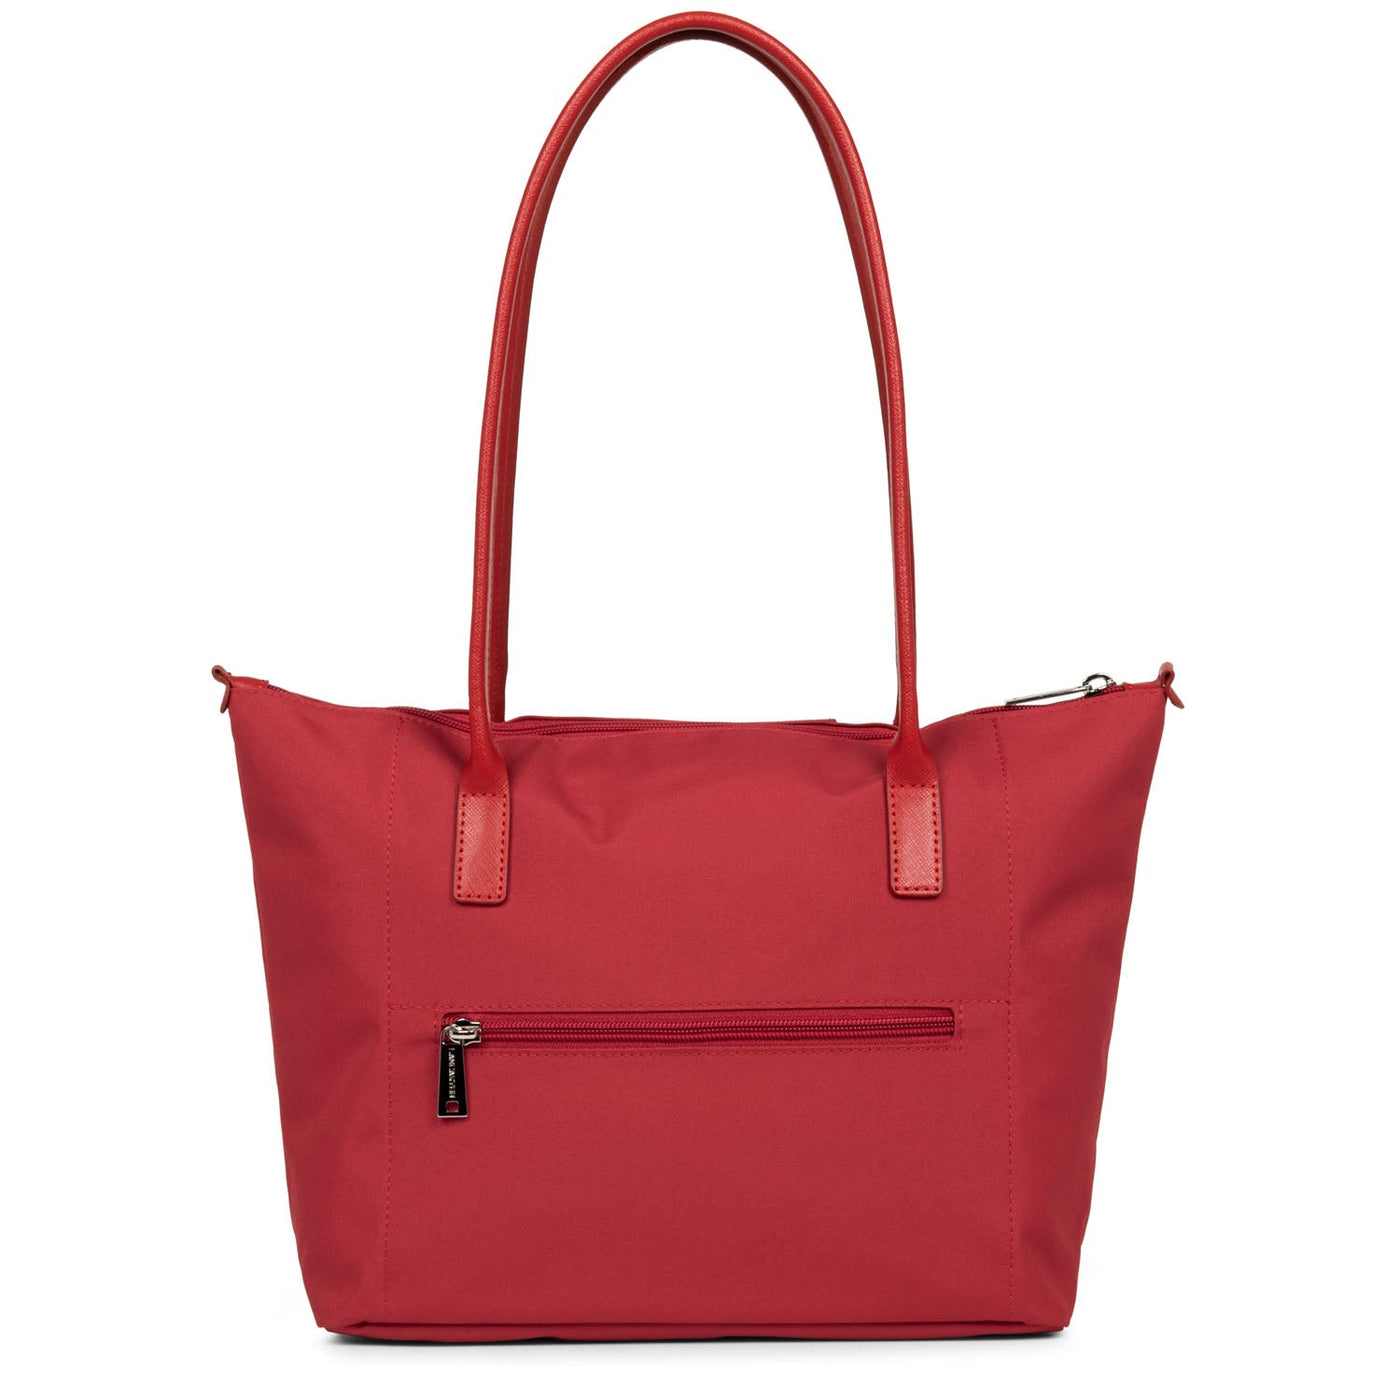 m tote bag - smart kba #couleur_rouge